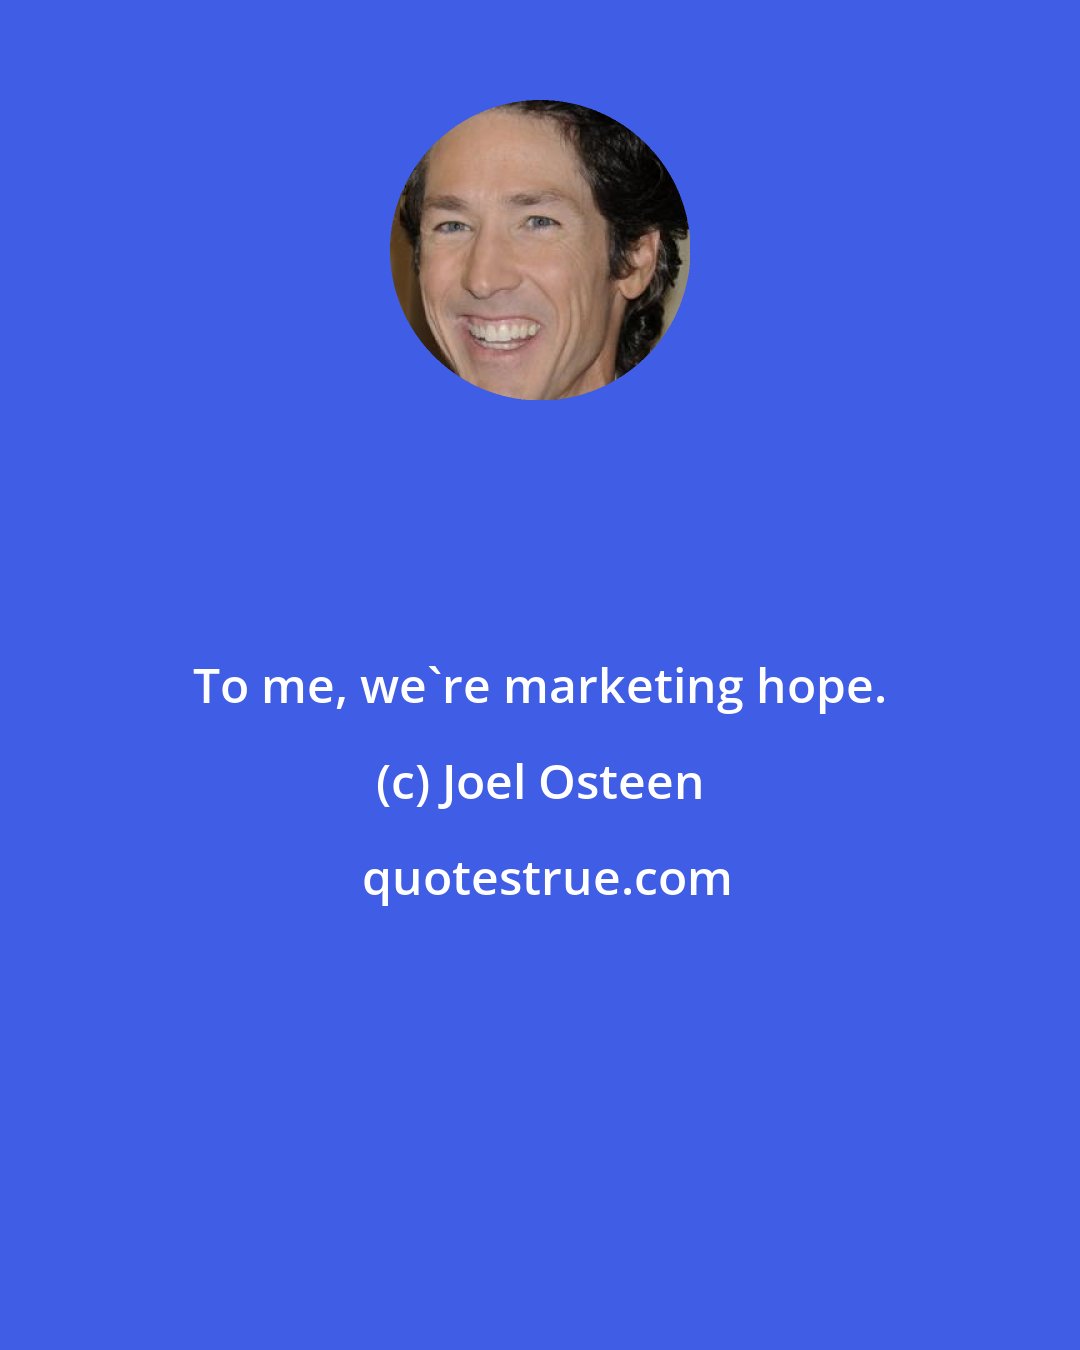 Joel Osteen: To me, we're marketing hope.